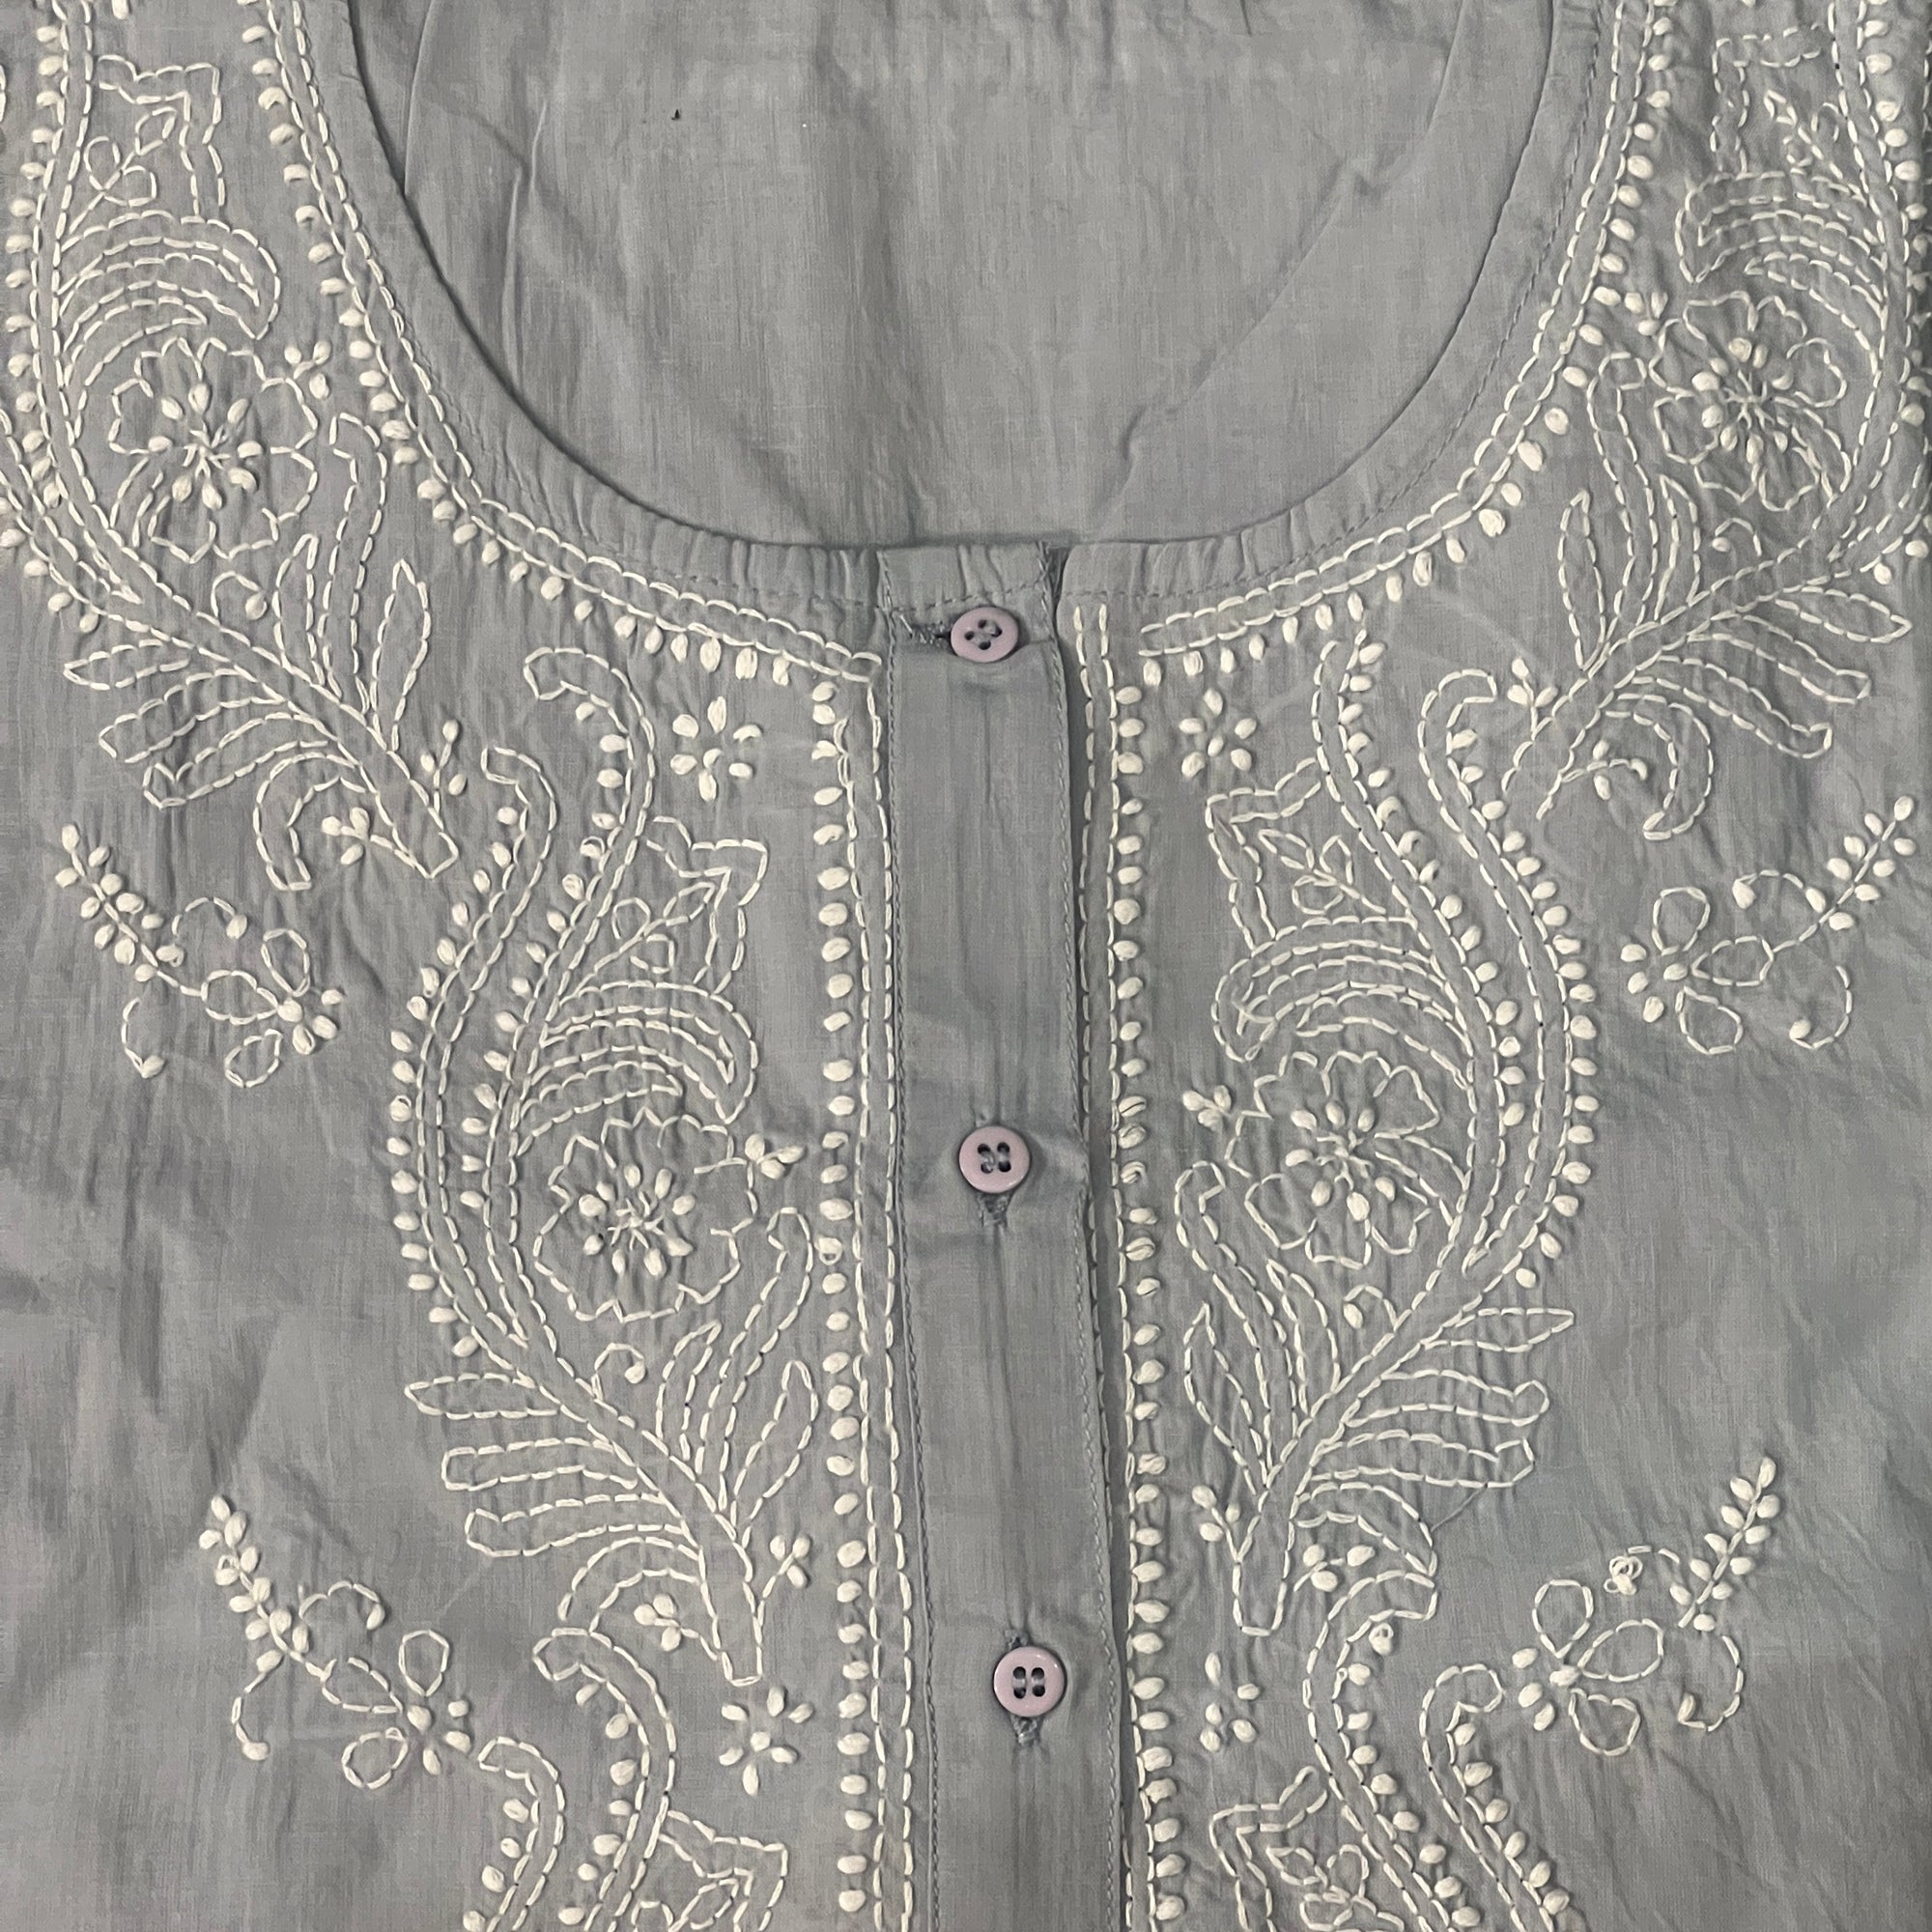 Cotton Chikan Short Kurtas 504-3 Colors - Vintage India NYC